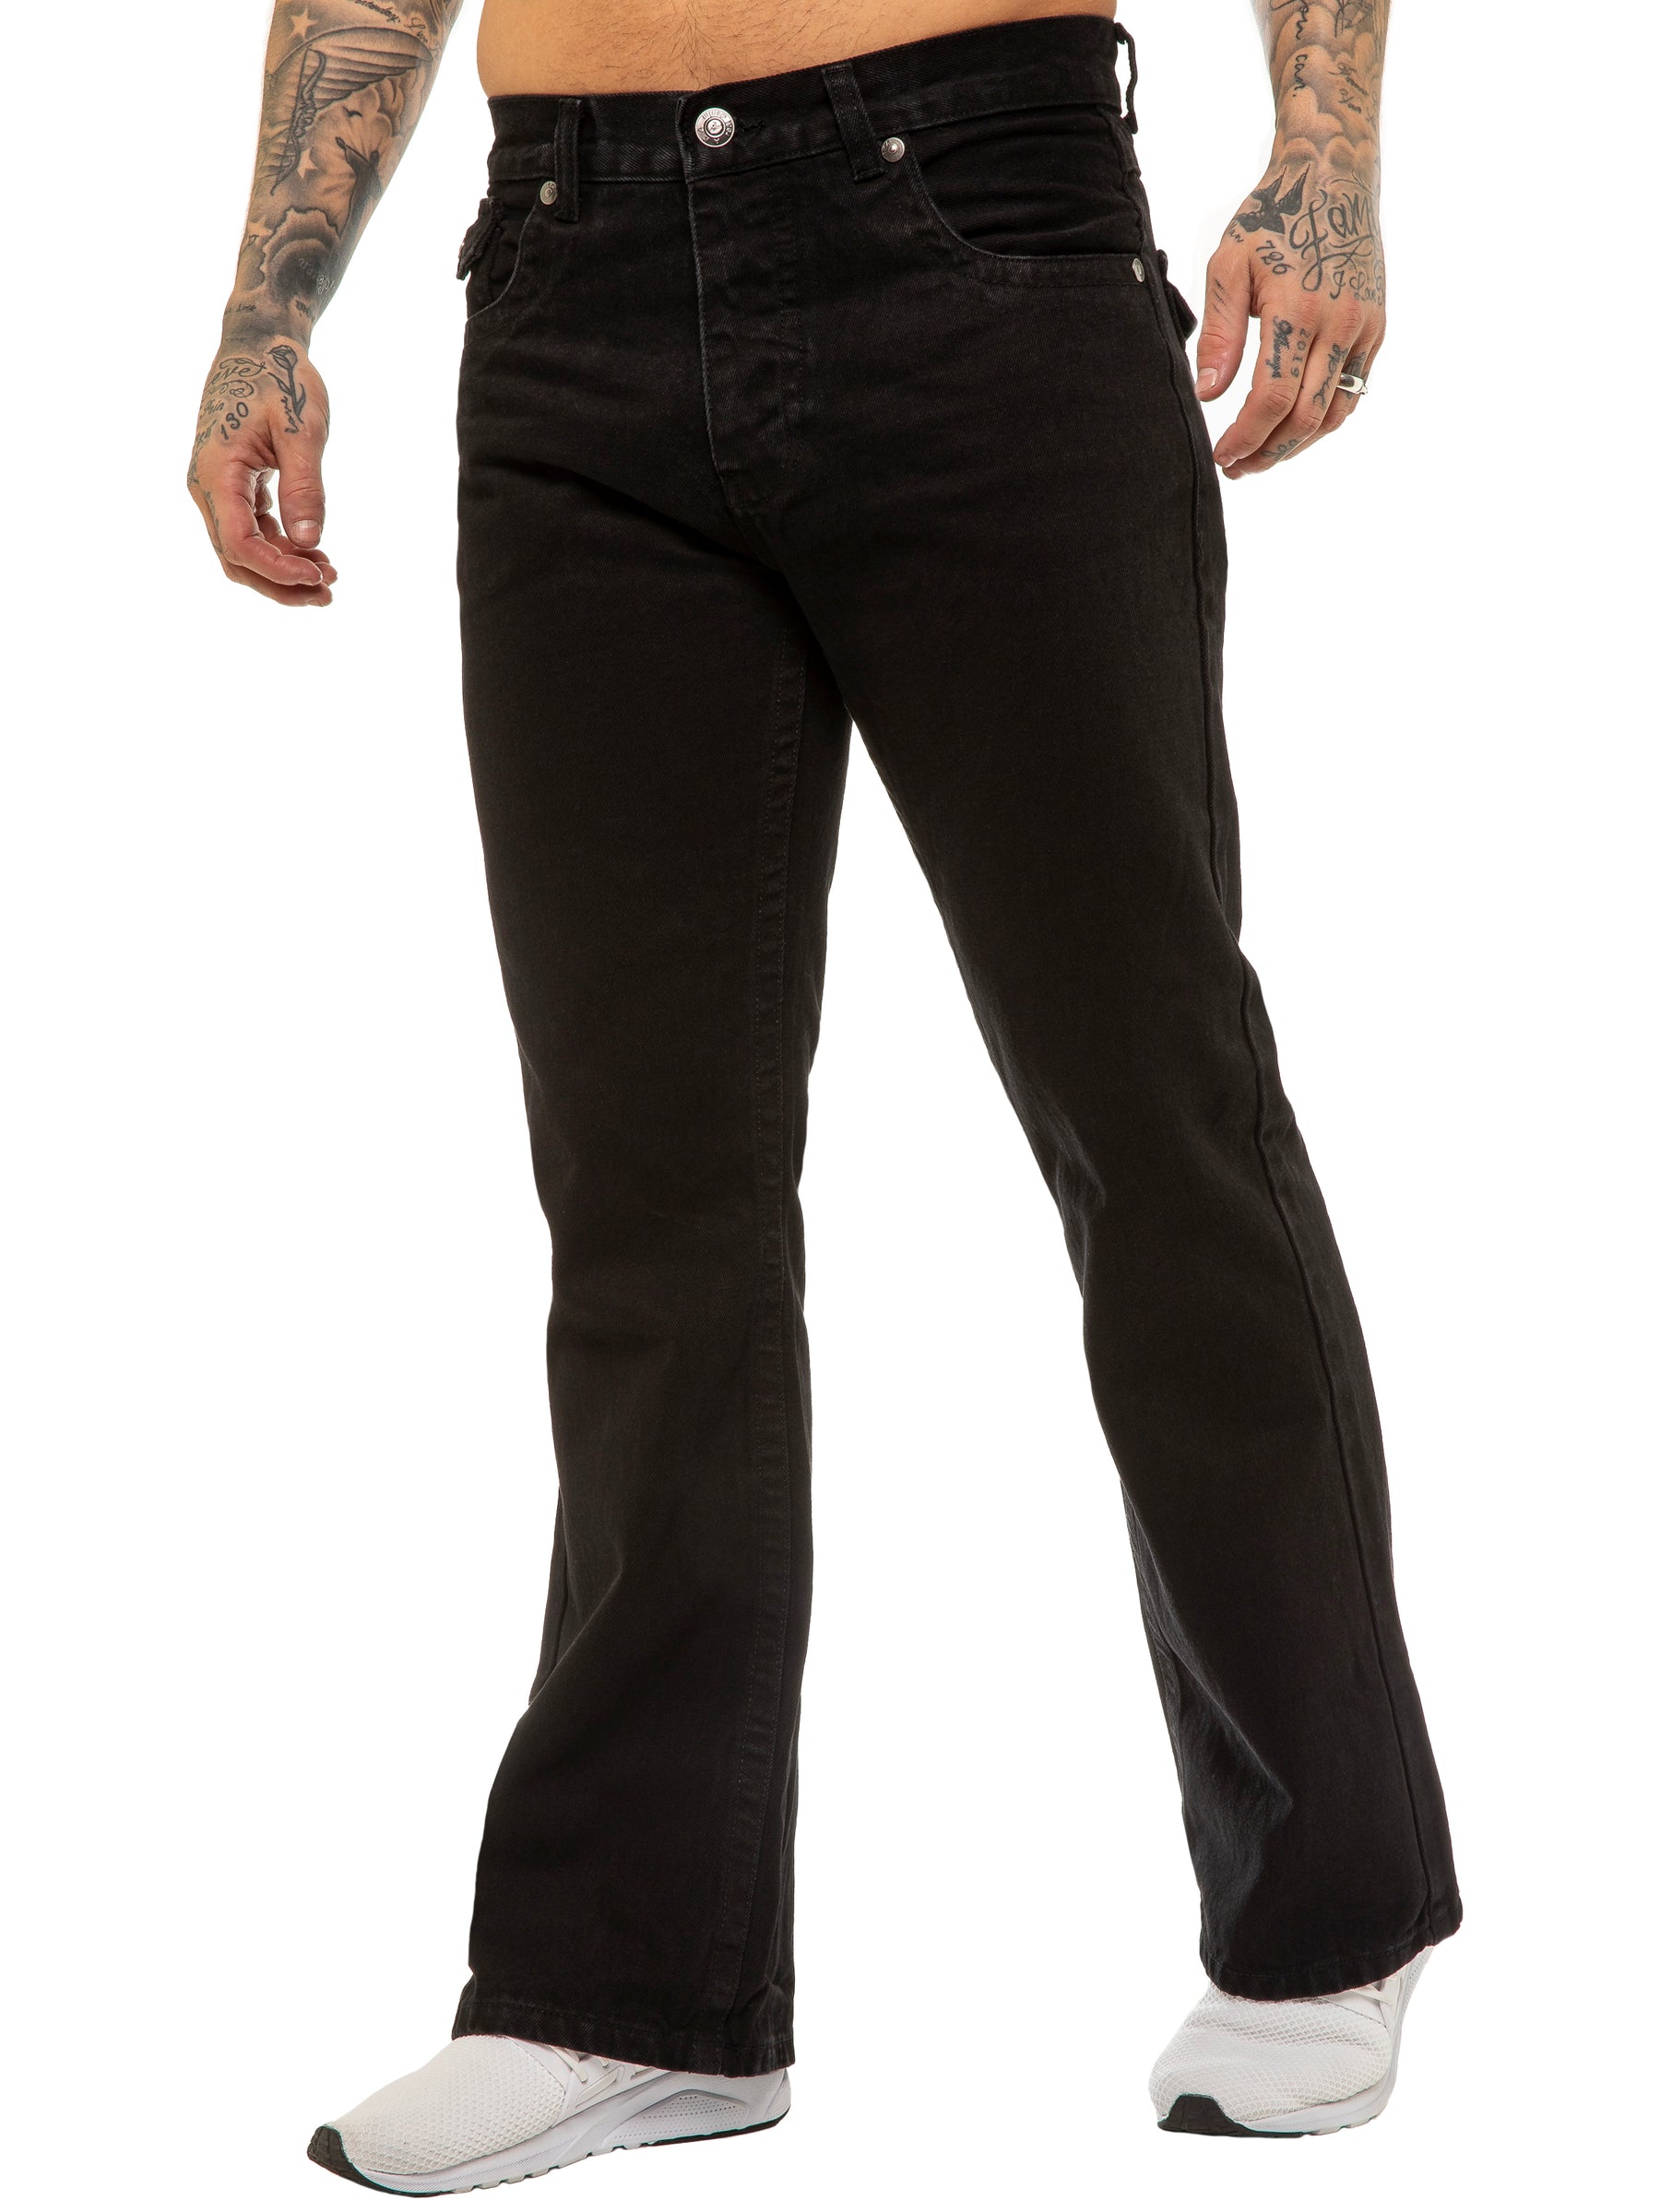 Mens Boot Cut Jeans Slightly Flared Slim Fit Famous Brand Blue Black jeans  Designer Classic Male Stretch Denim jeans - OnshopDeals.Com